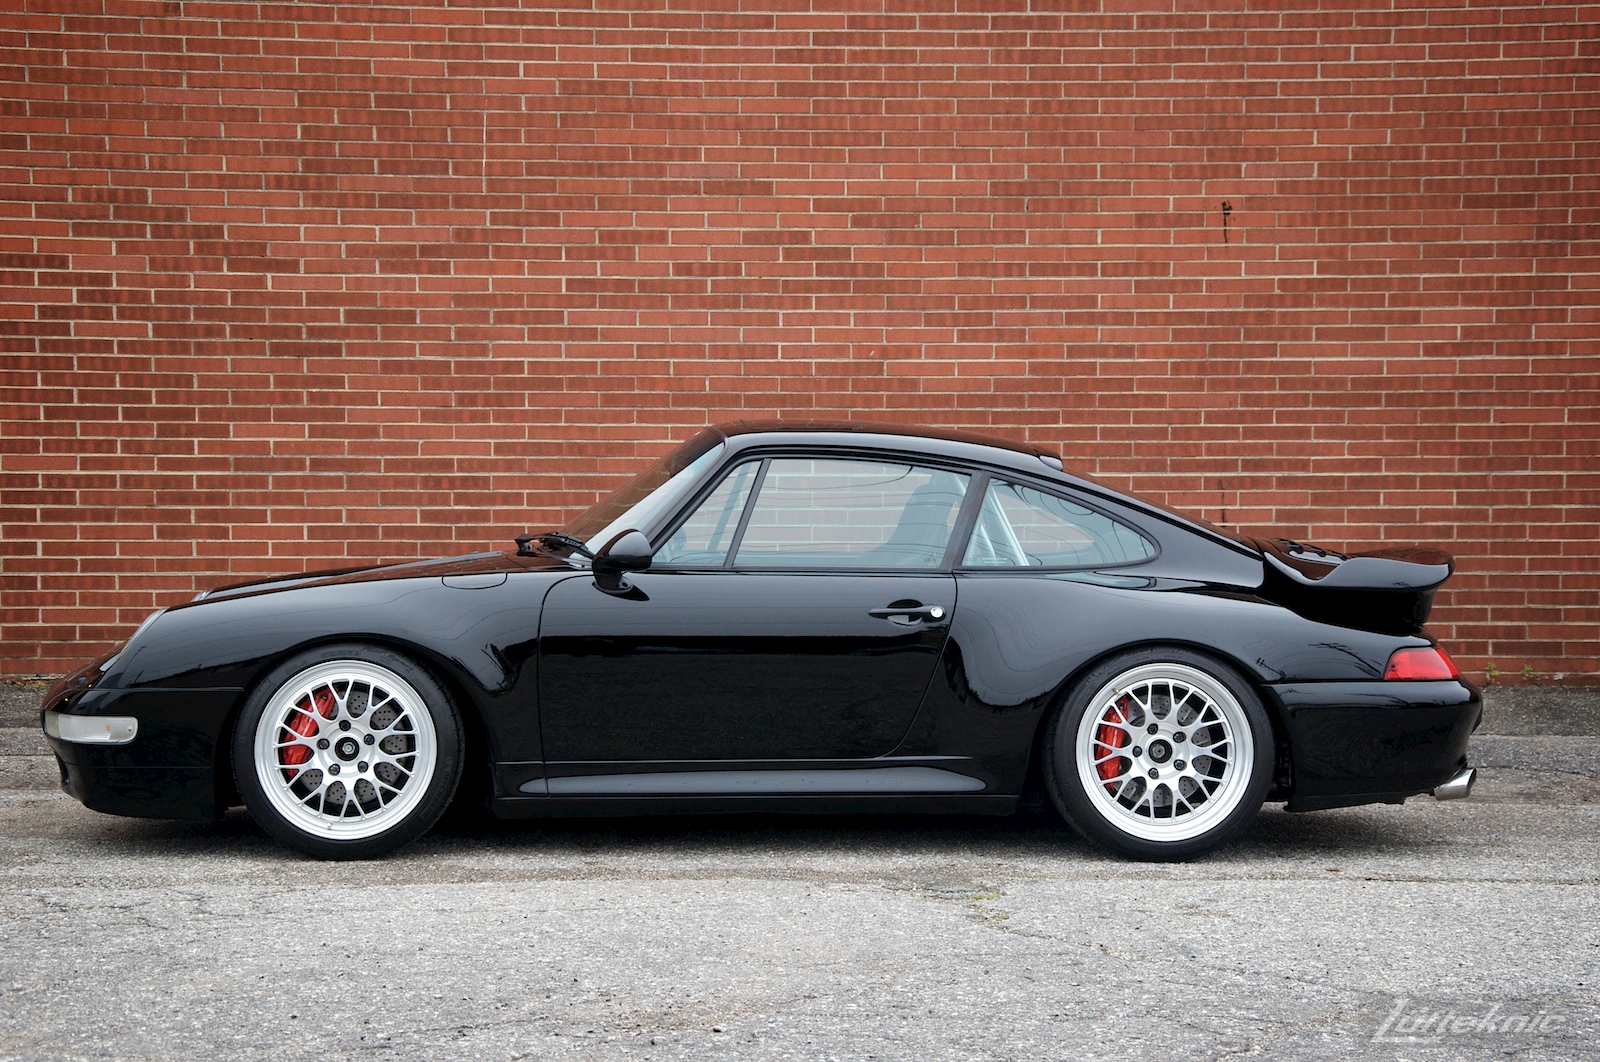 A black 993 Porsche Turbo GT2 conversion sits in the Lufteknic parking lot.